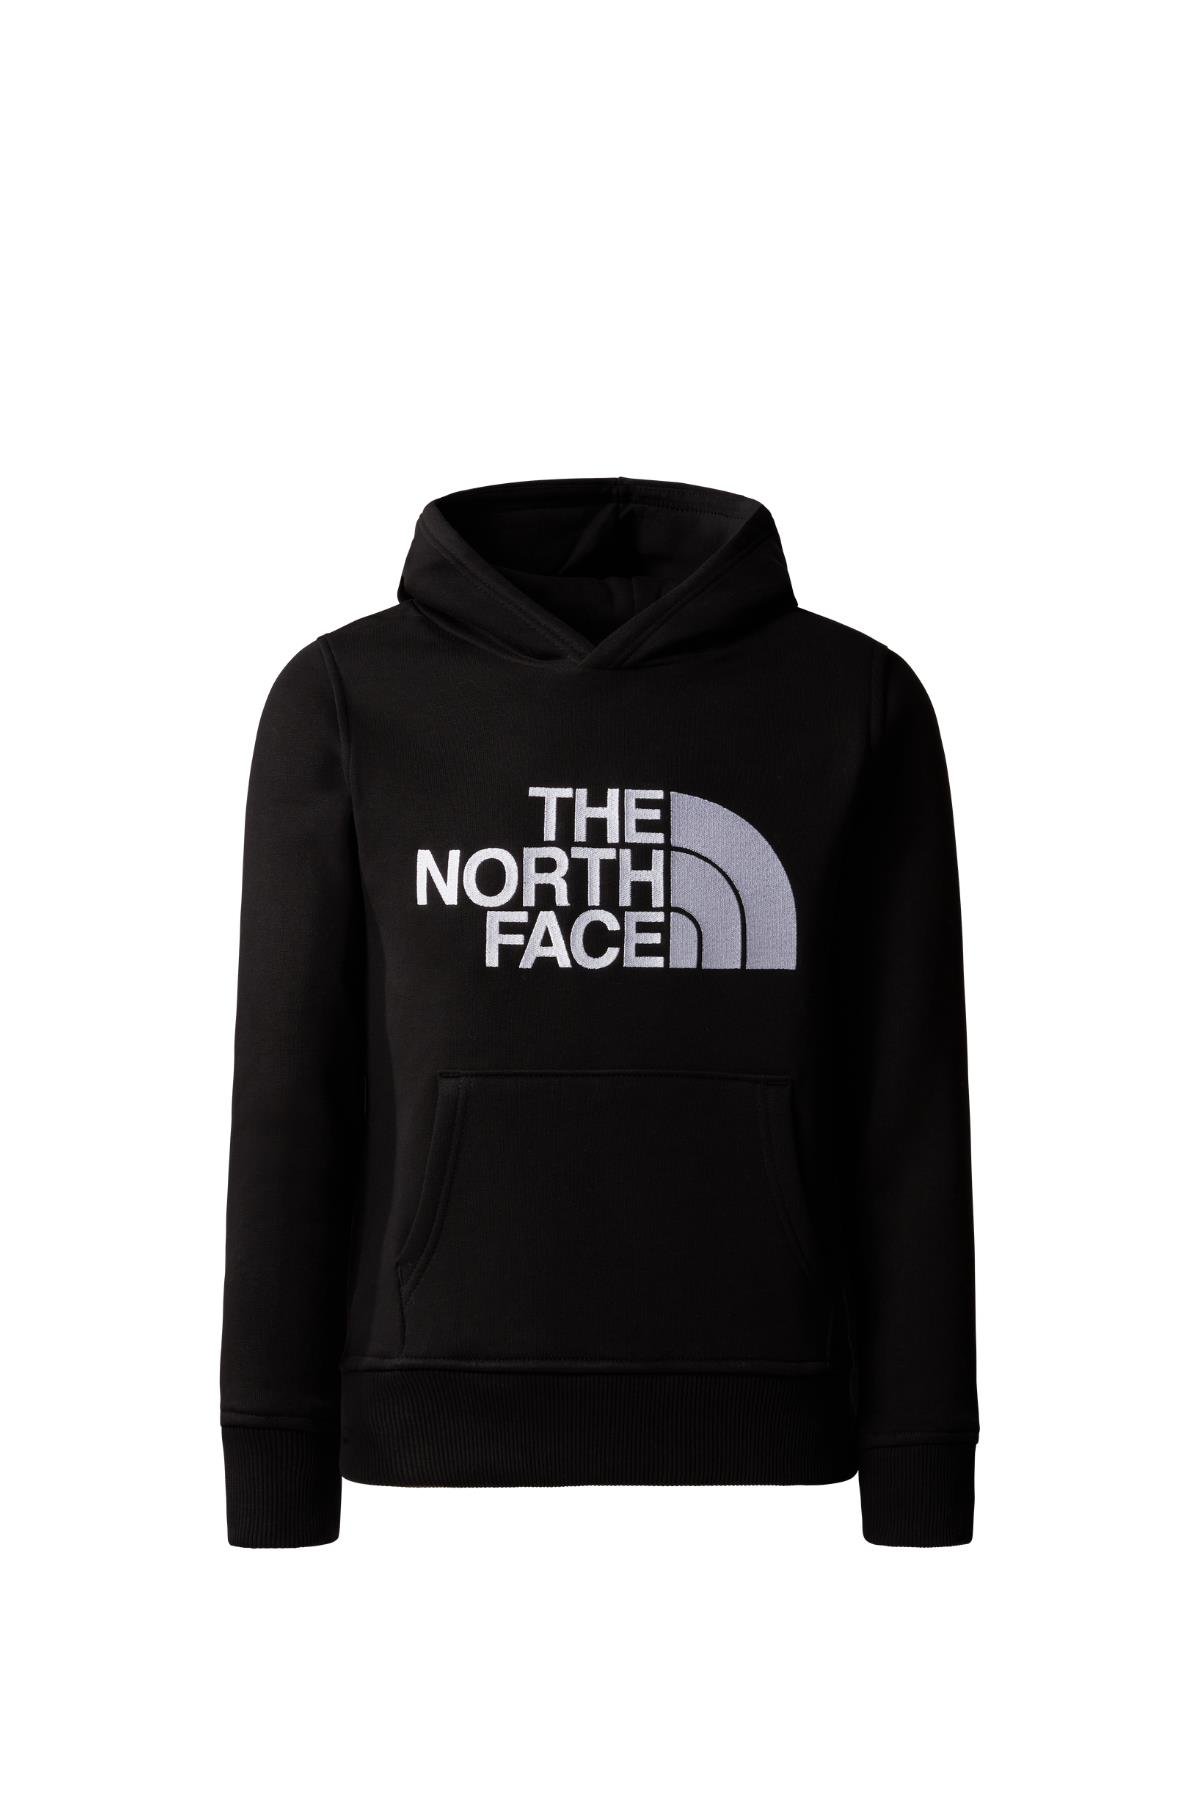 The North Face B Drew Peak P/O Hoodie Çocuk Sweatshirt Siyah